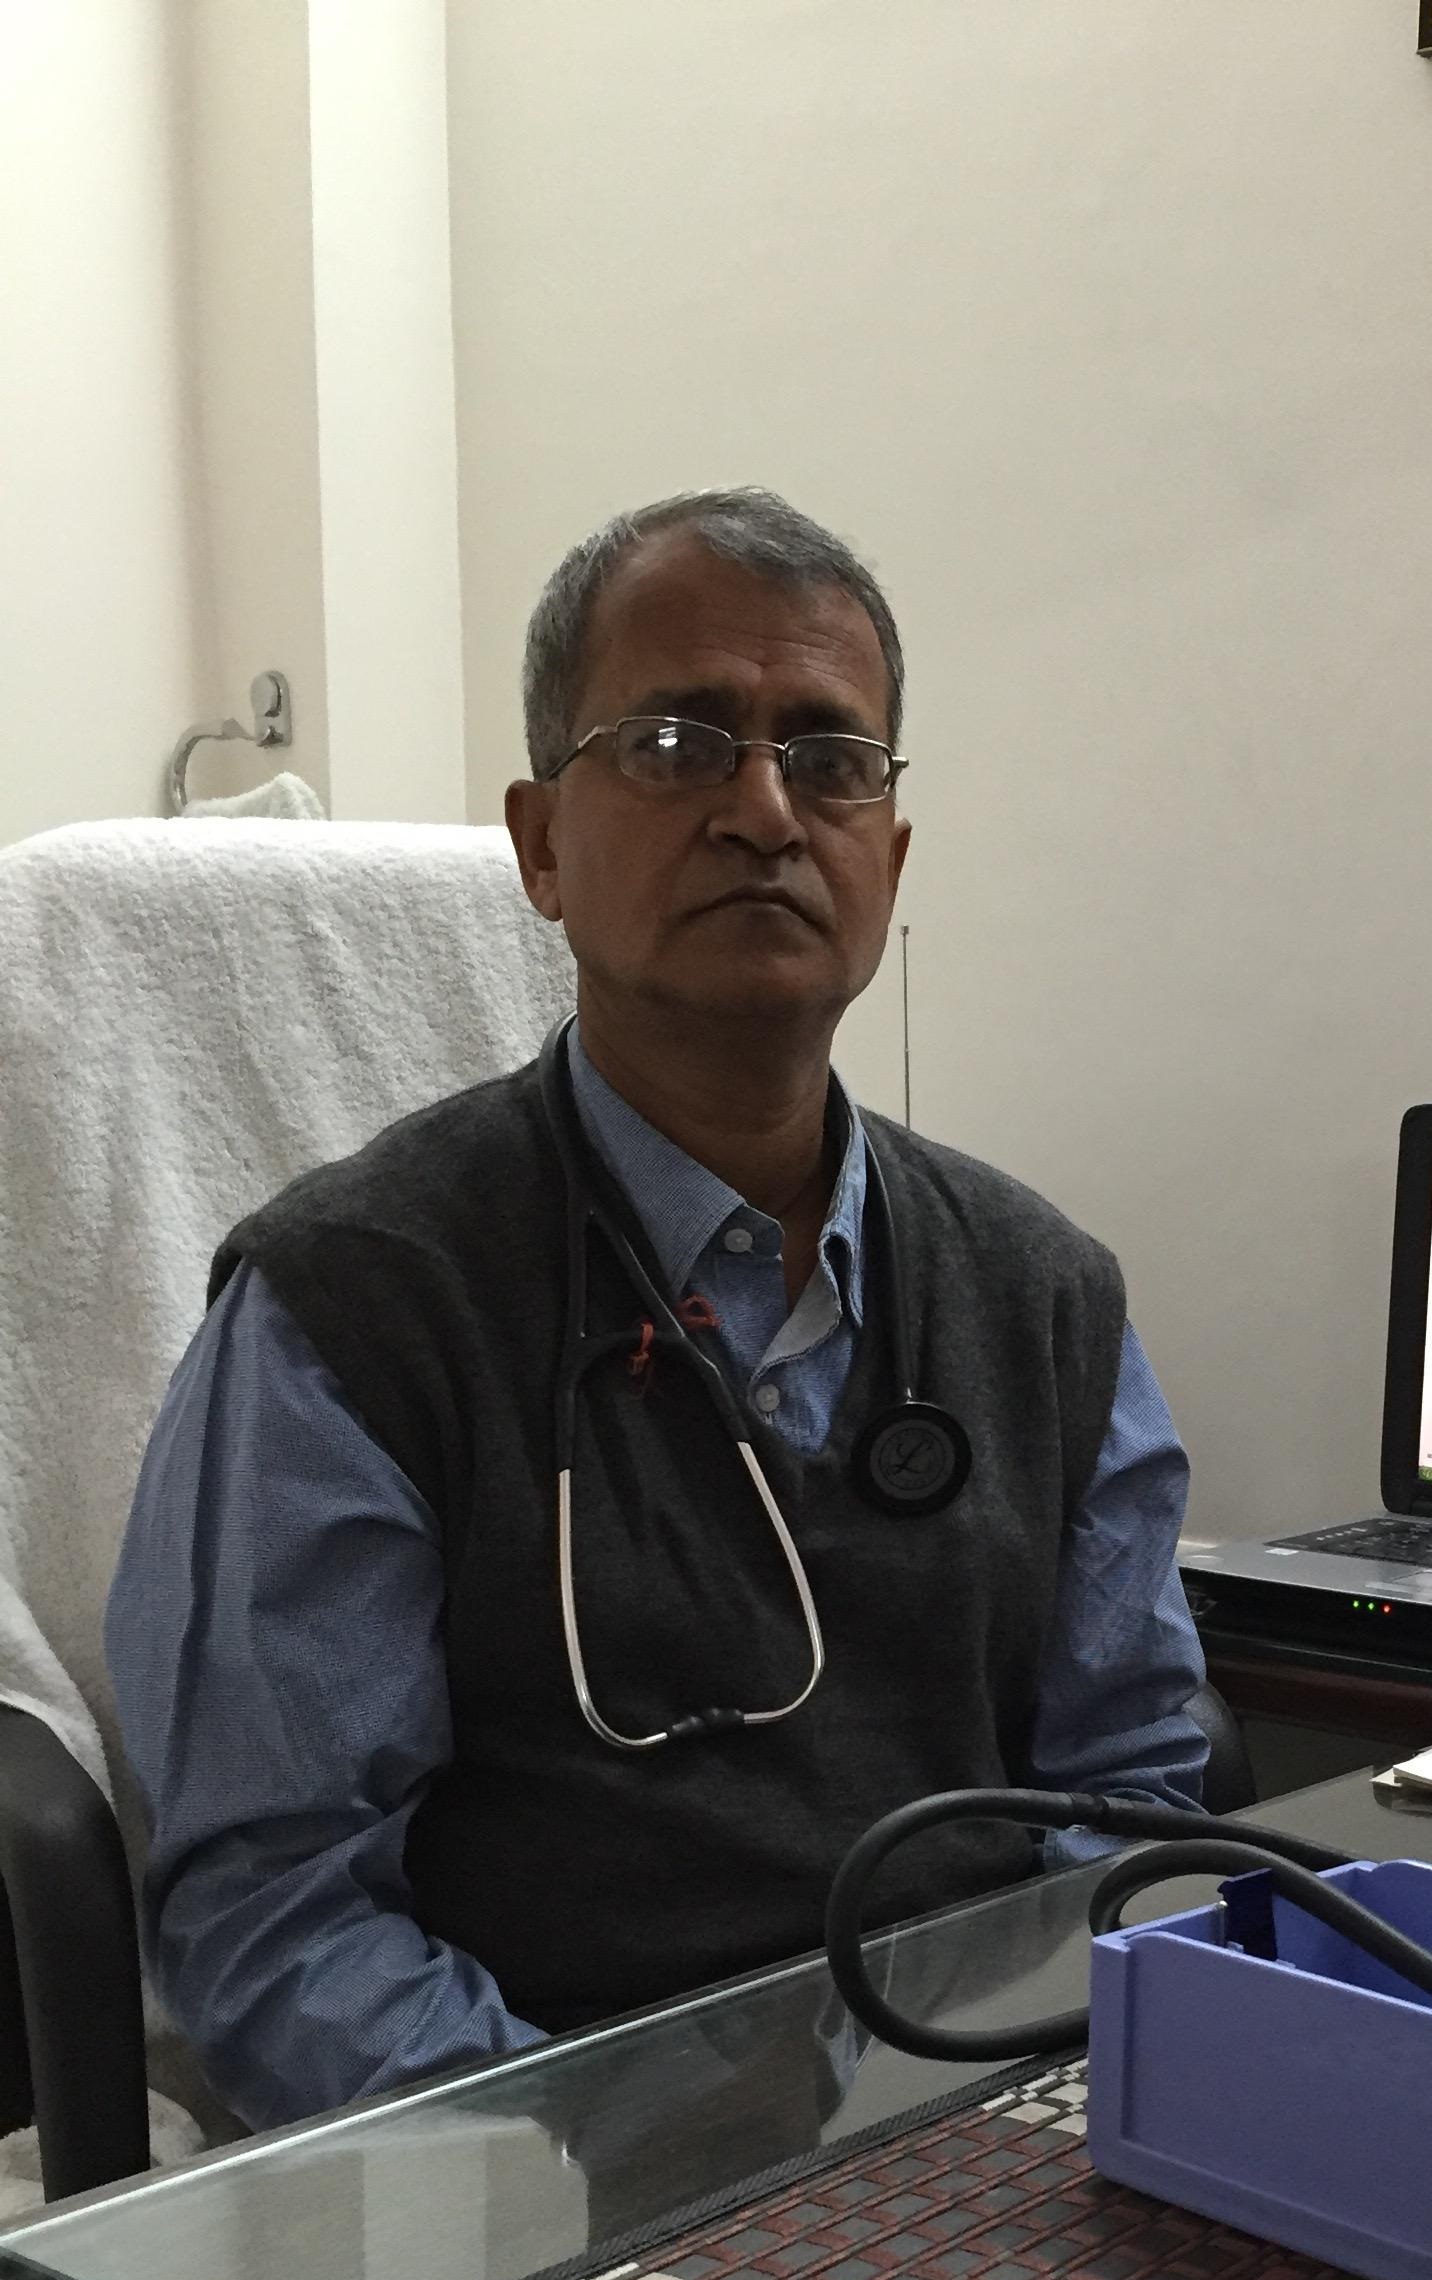 Dr. V.k.  Kanodia from Near Main Circle, Shastri Nagar, Jaipur ,Jaipur, Rajasthan, 302016, India 33 years experience in Speciality General Physician | Kayawell